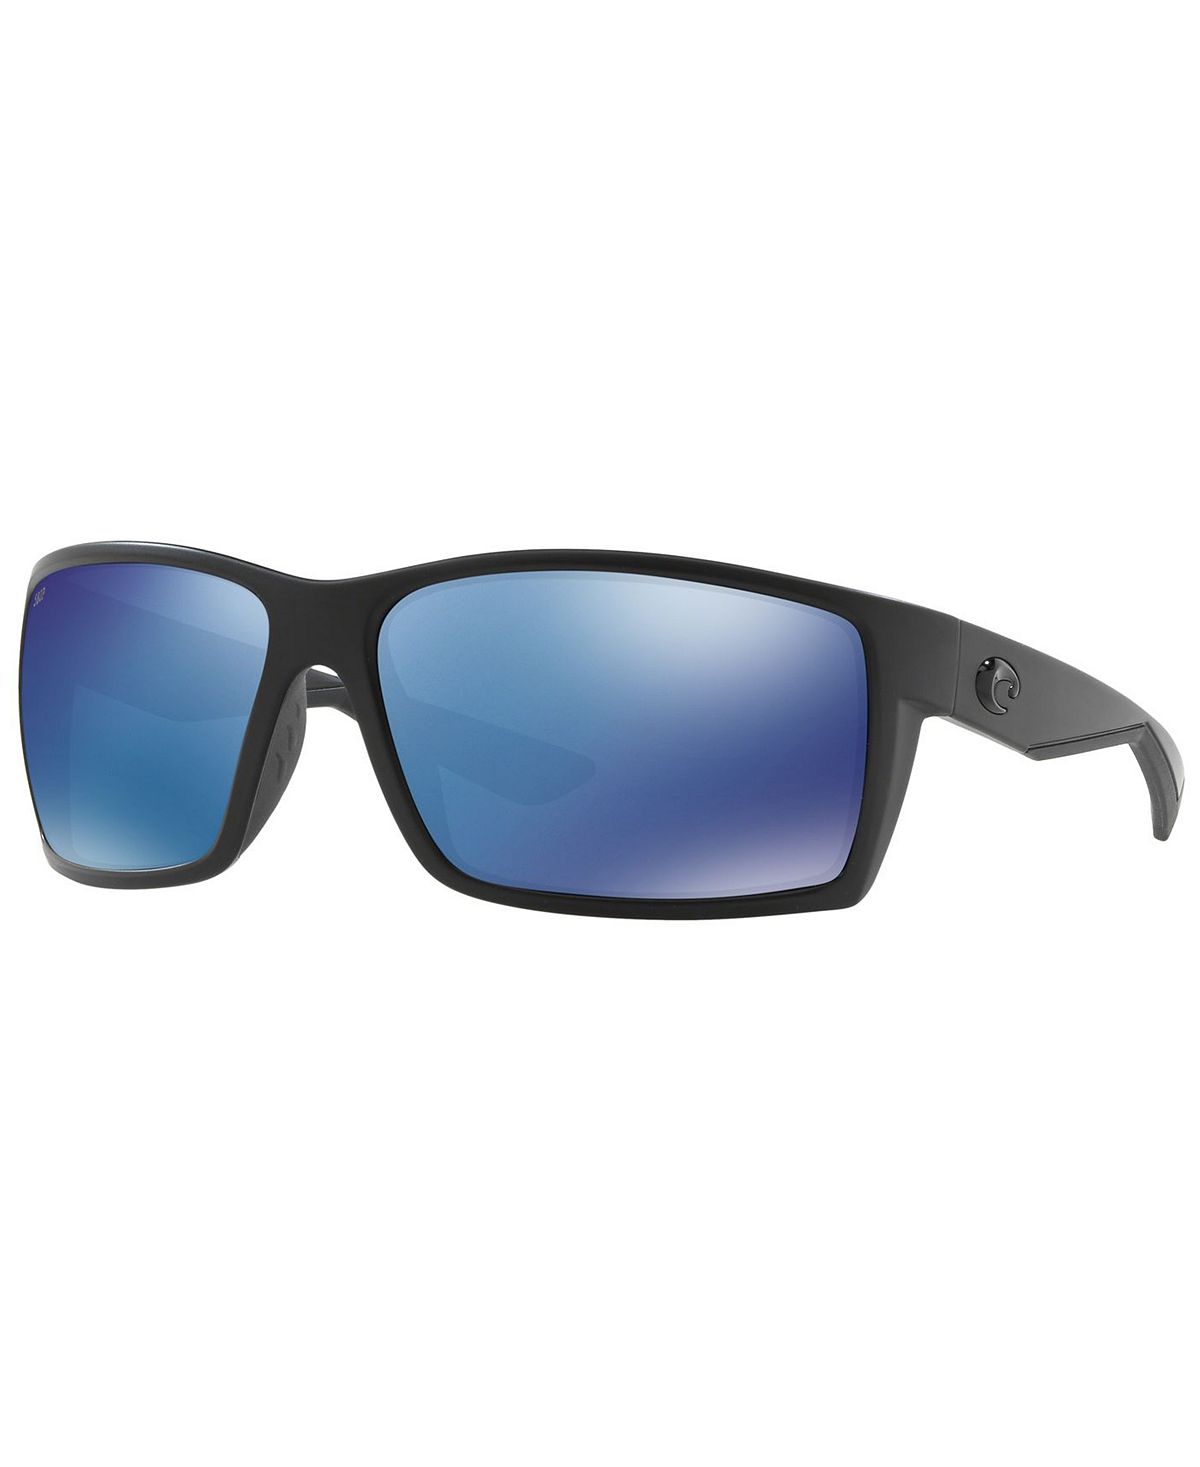 black juneau mirror lake Поляризационные солнцезащитные очки, REEFTON 64 Costa Del Mar